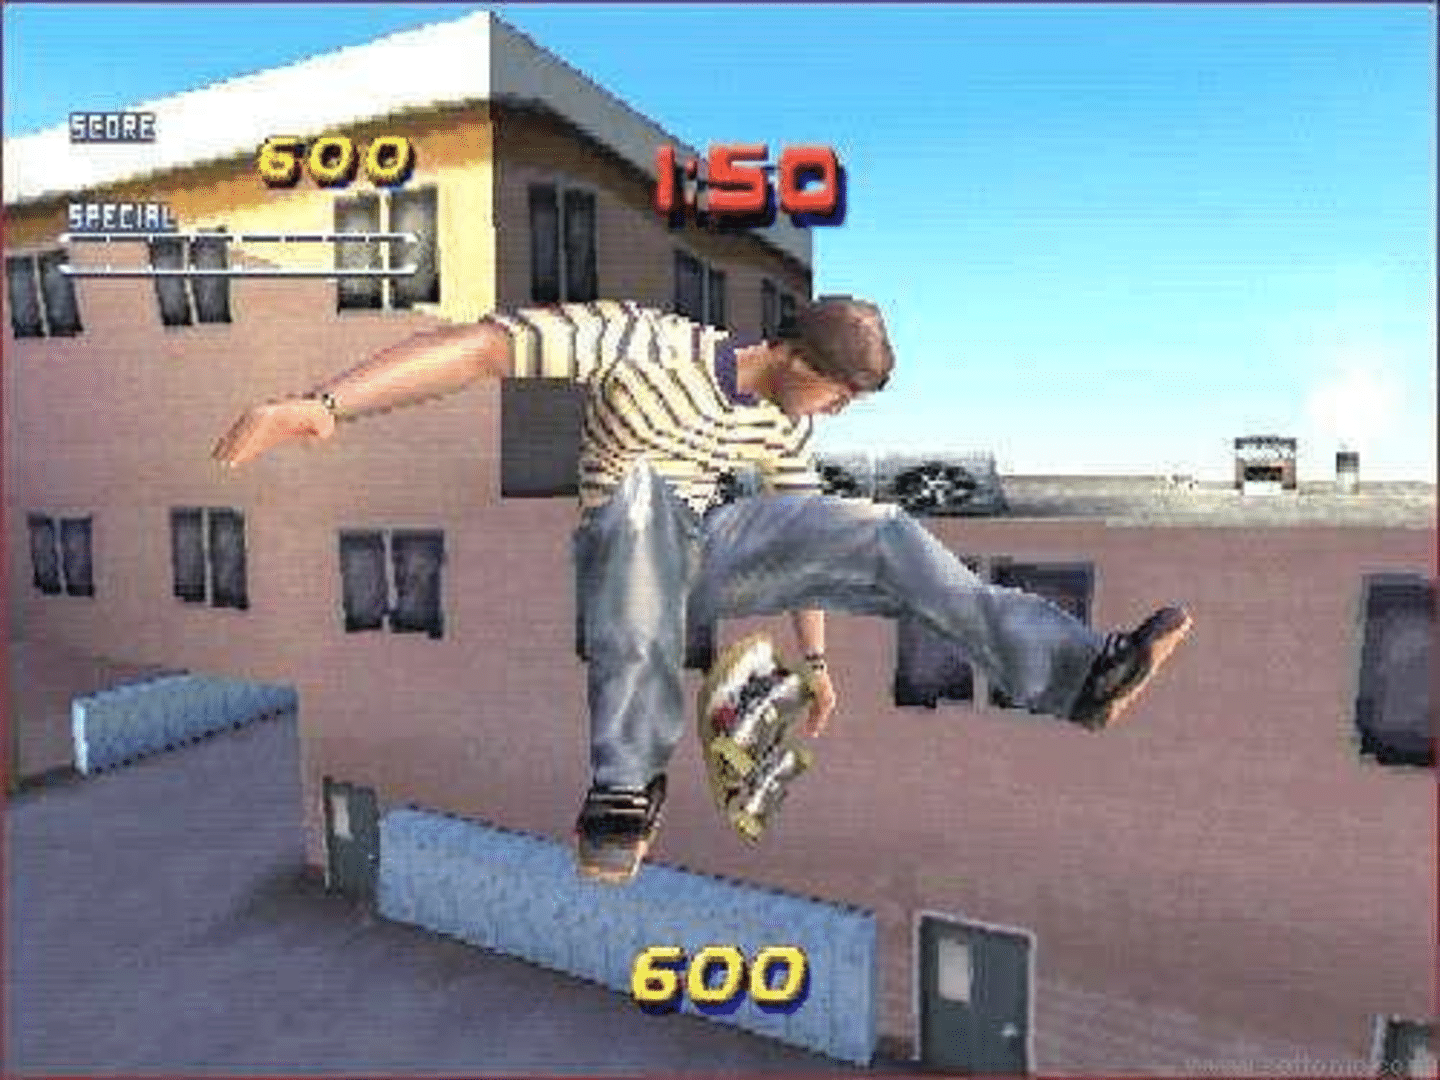  Tony Hawk's Pro Skater 2 : Video Games